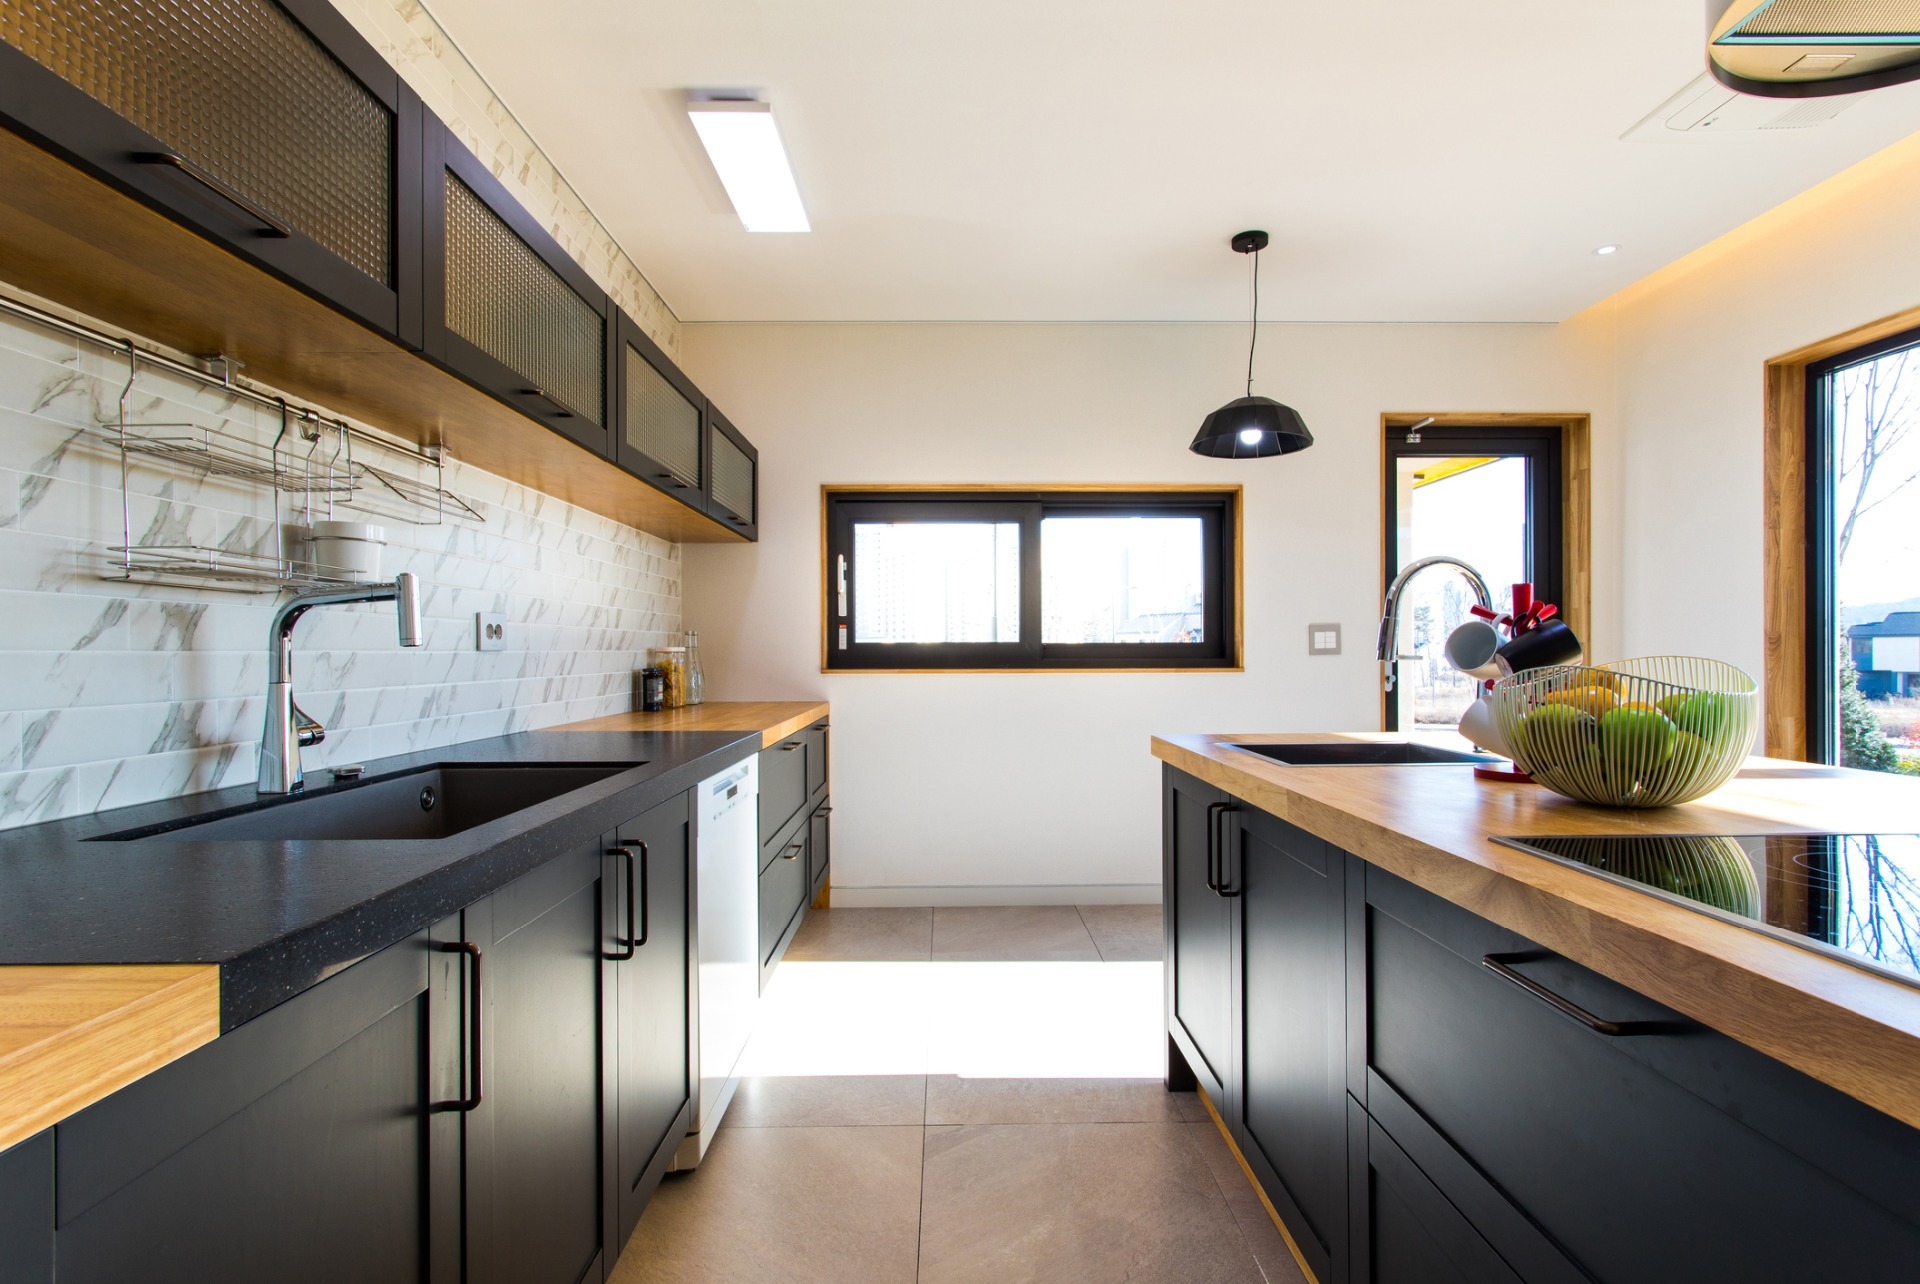 A modern Kitchens built with you in mind North Devon.